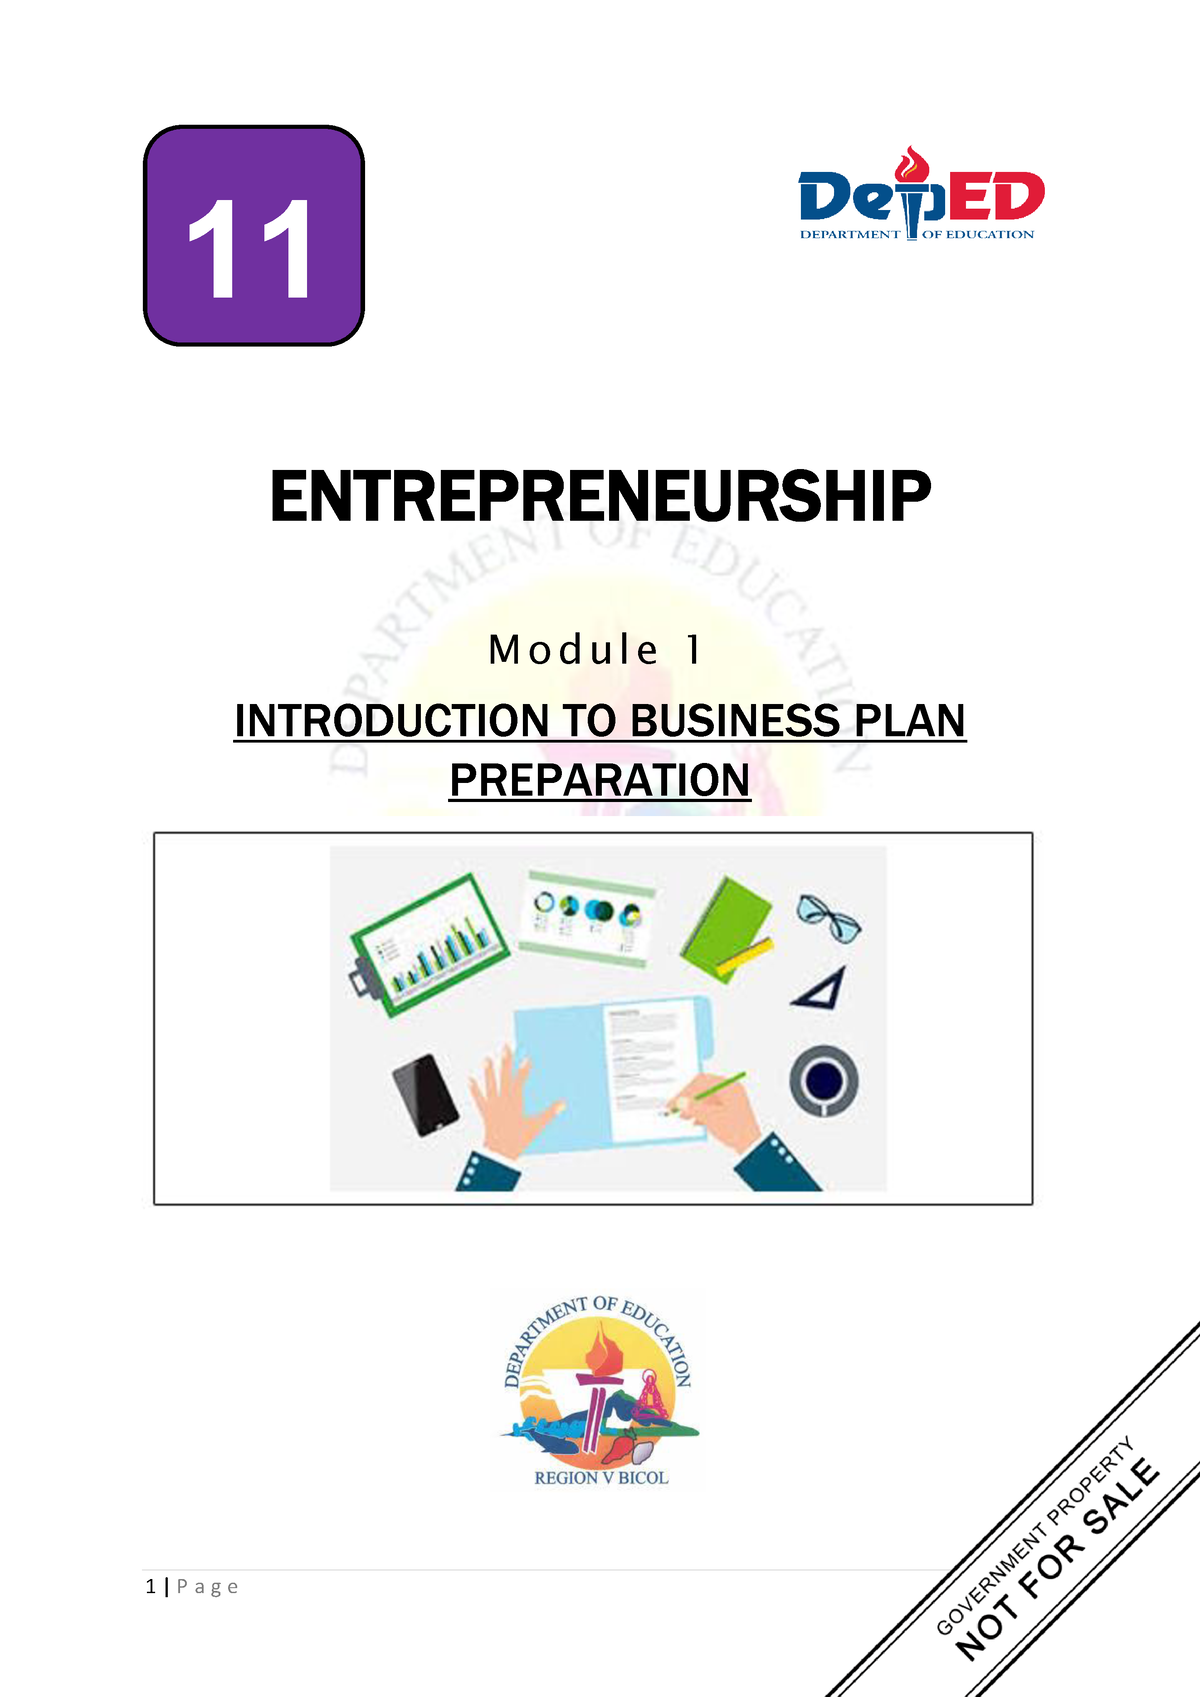 entrepreneurship module 1 introduction to business plan preparation